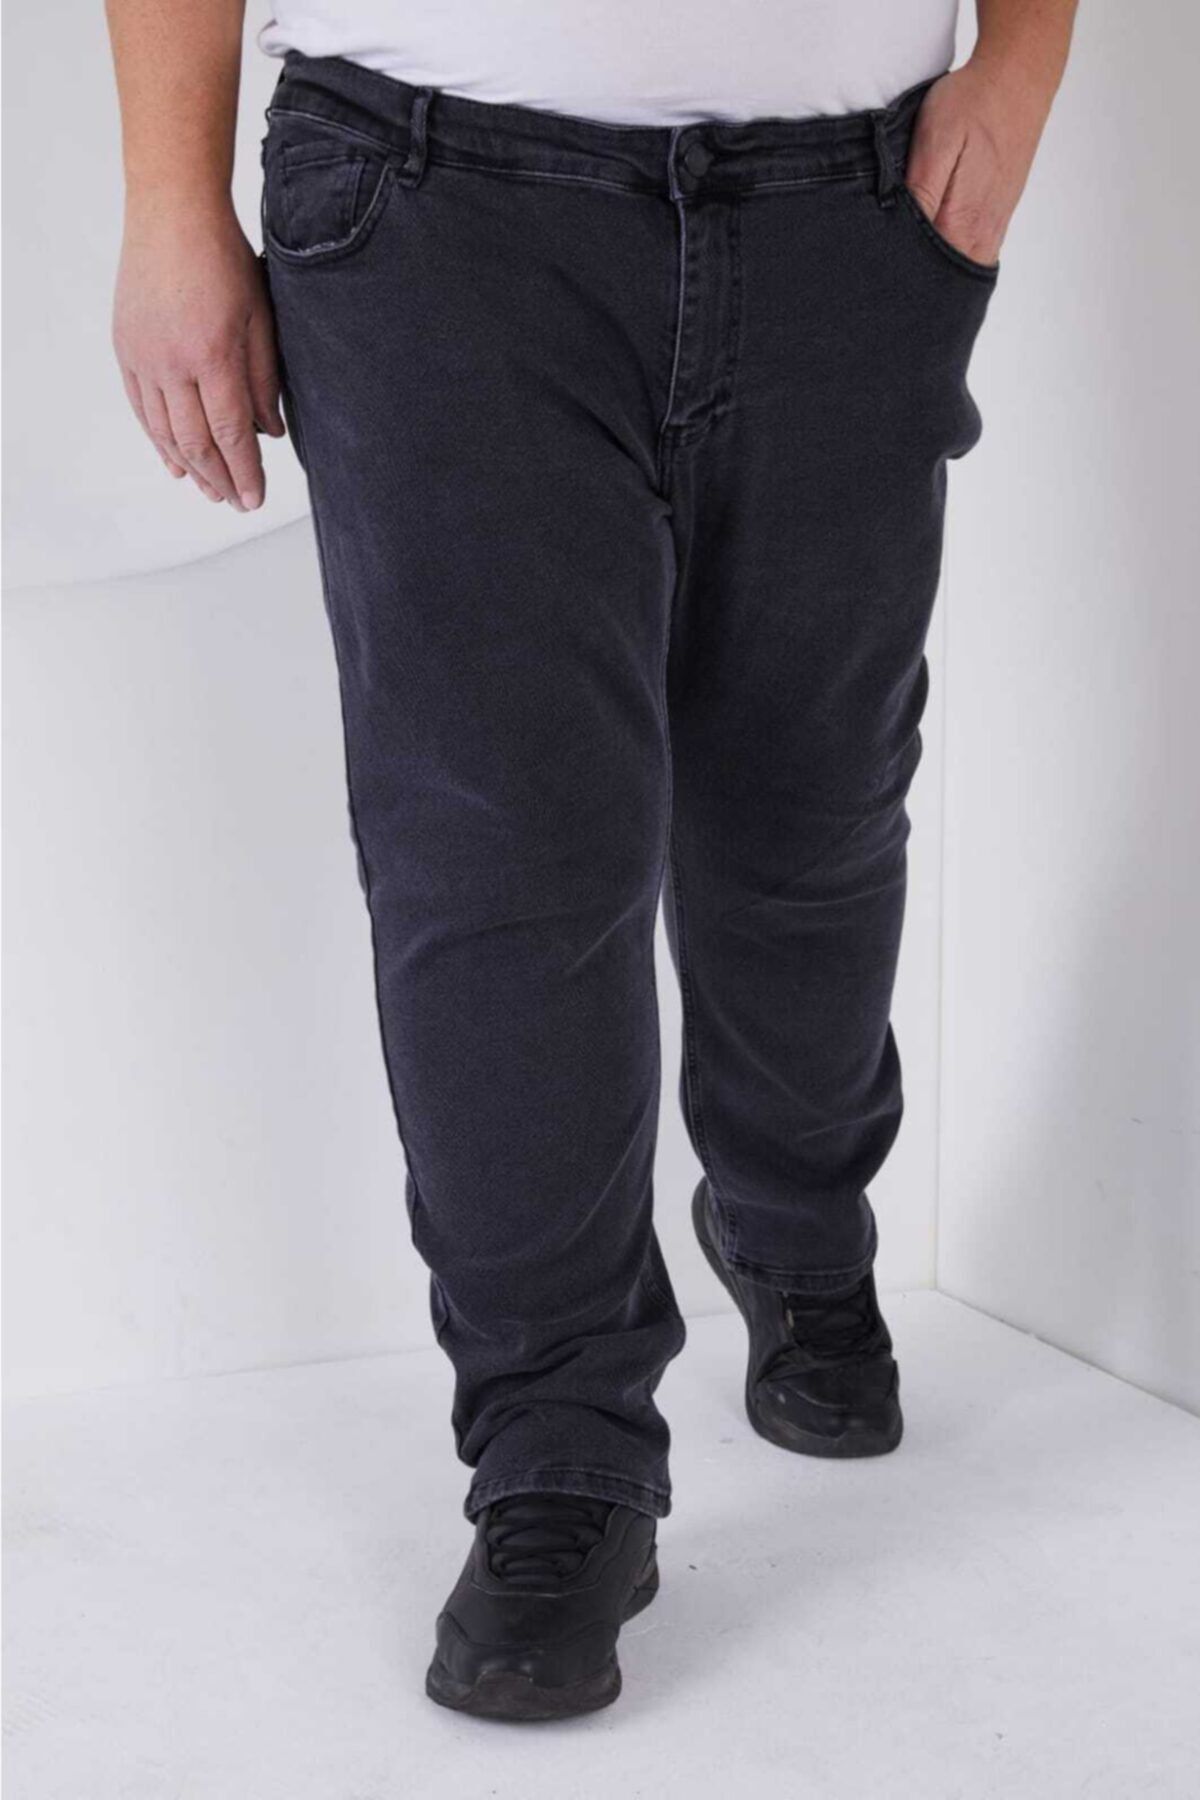 Public Jeans Erkek Füme Renk Süper Battal Beden Likralı Normal Bel Düz Paça Kot Pantolon 21522